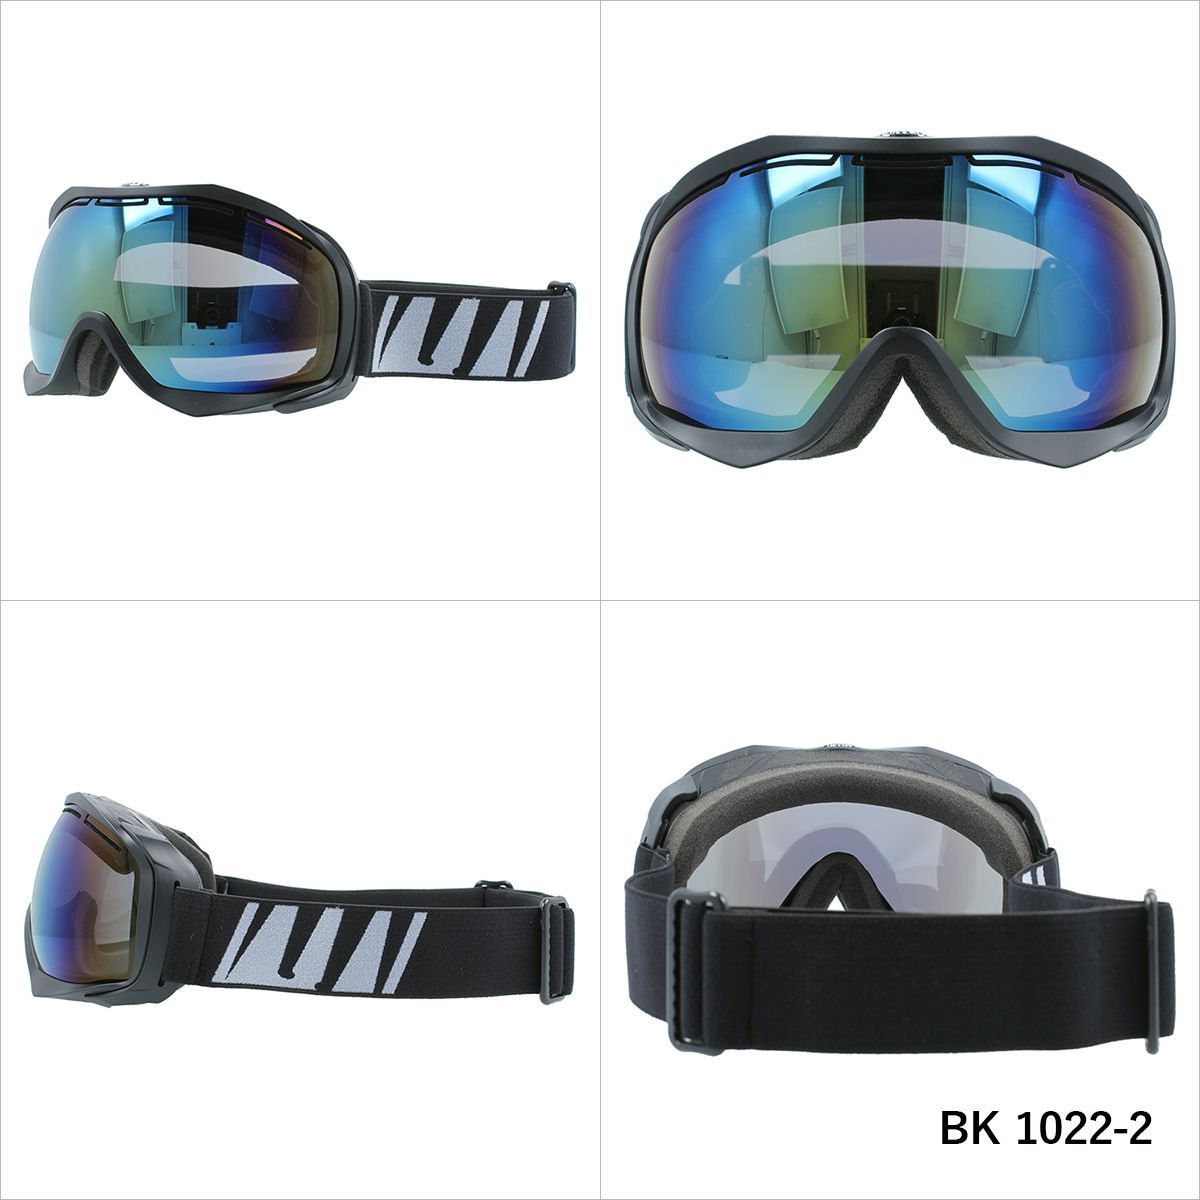 BAKKNEL バクネル BK 1022 眼鏡対応 ヘルメット対応 ミラーレンズ スノーゴーグル スキー スノーボード スノボ 球面ダブルレンズ フレームあり メンズ レディース ウィンタースポーツ 曇り防止 曇り止め 誕生日 プレゼント 男性 女性